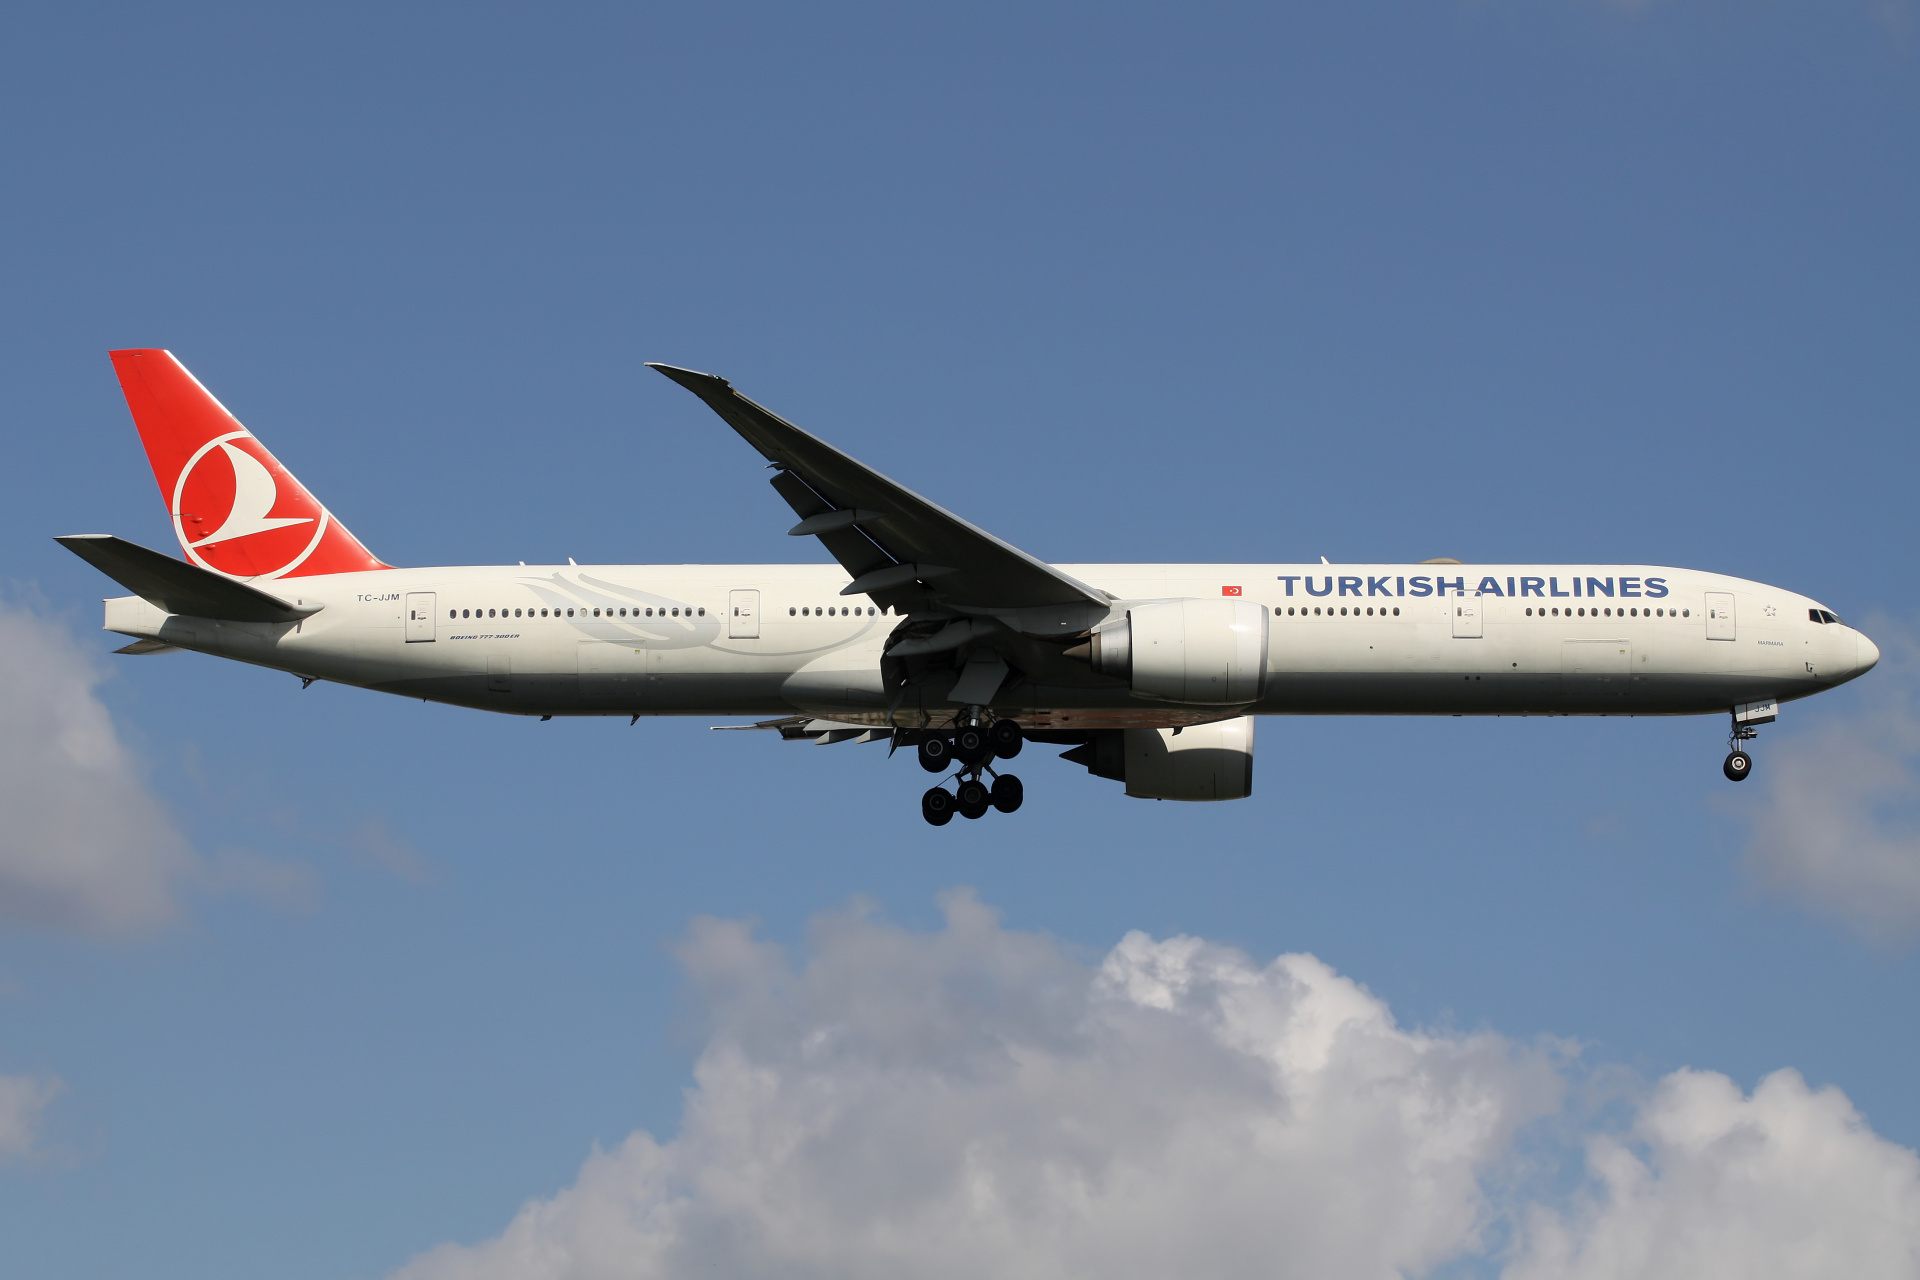 TC-JJM (Samoloty » Port Lotniczy im. Atatürka w Stambule » Boeing 777-300ER » THY Turkish Airlines)